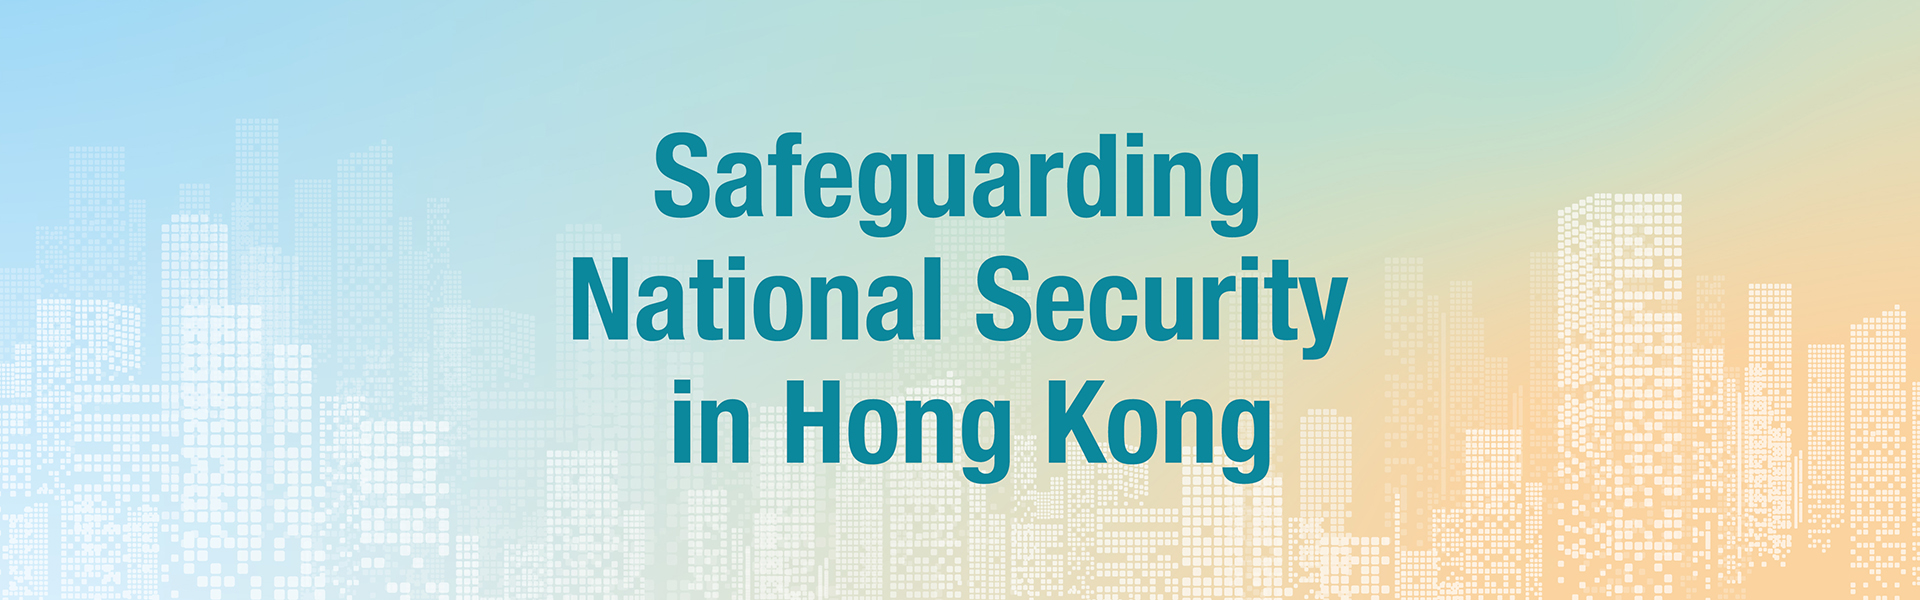 Banner - Safeguarding National Security in Hong Kong